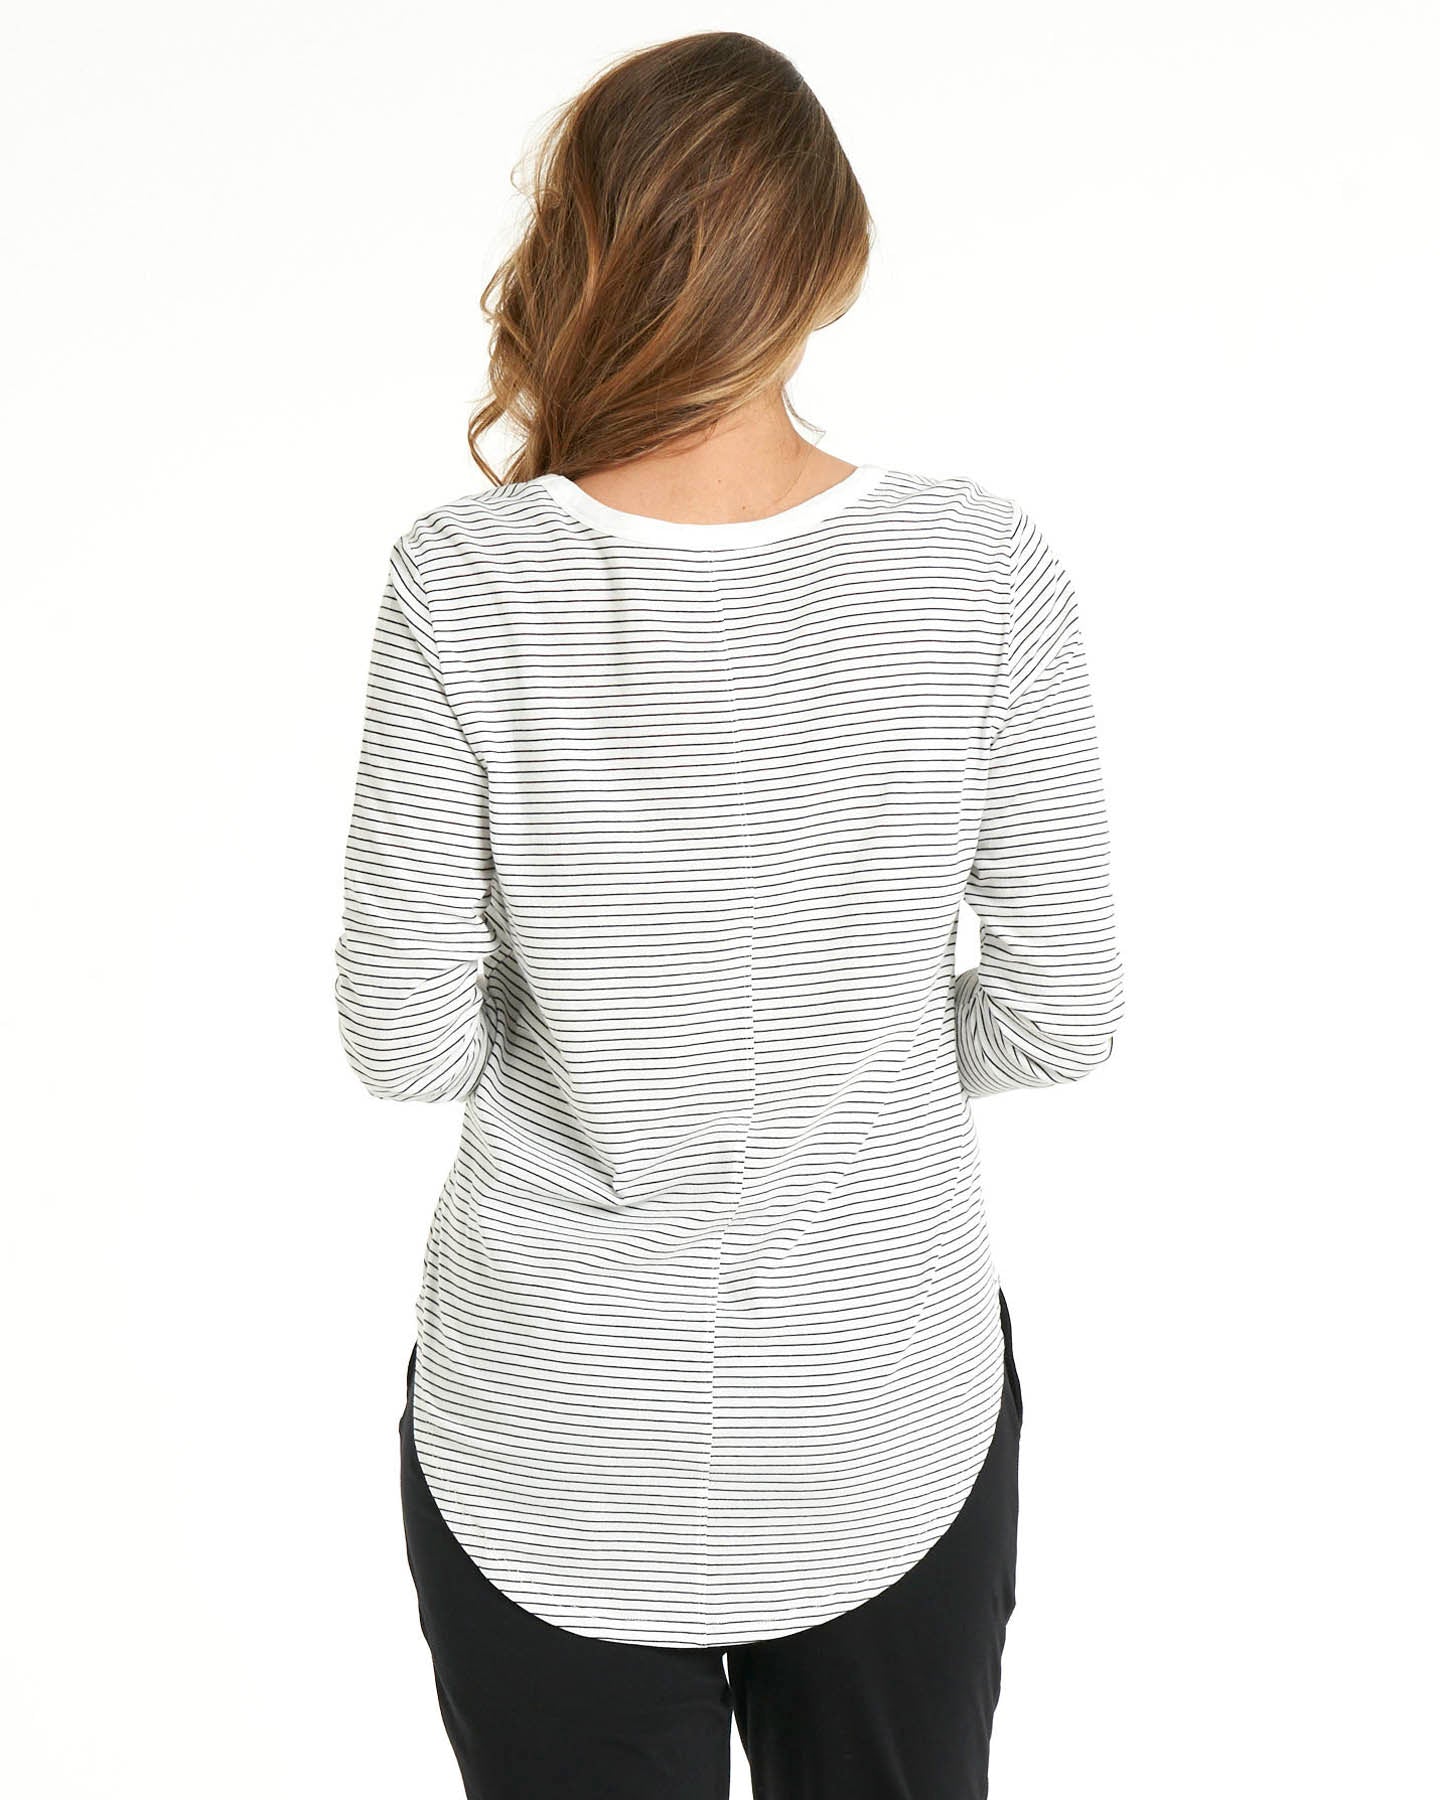 Megan Long Sleeve Cotton Basic Top - White / Black Stripe